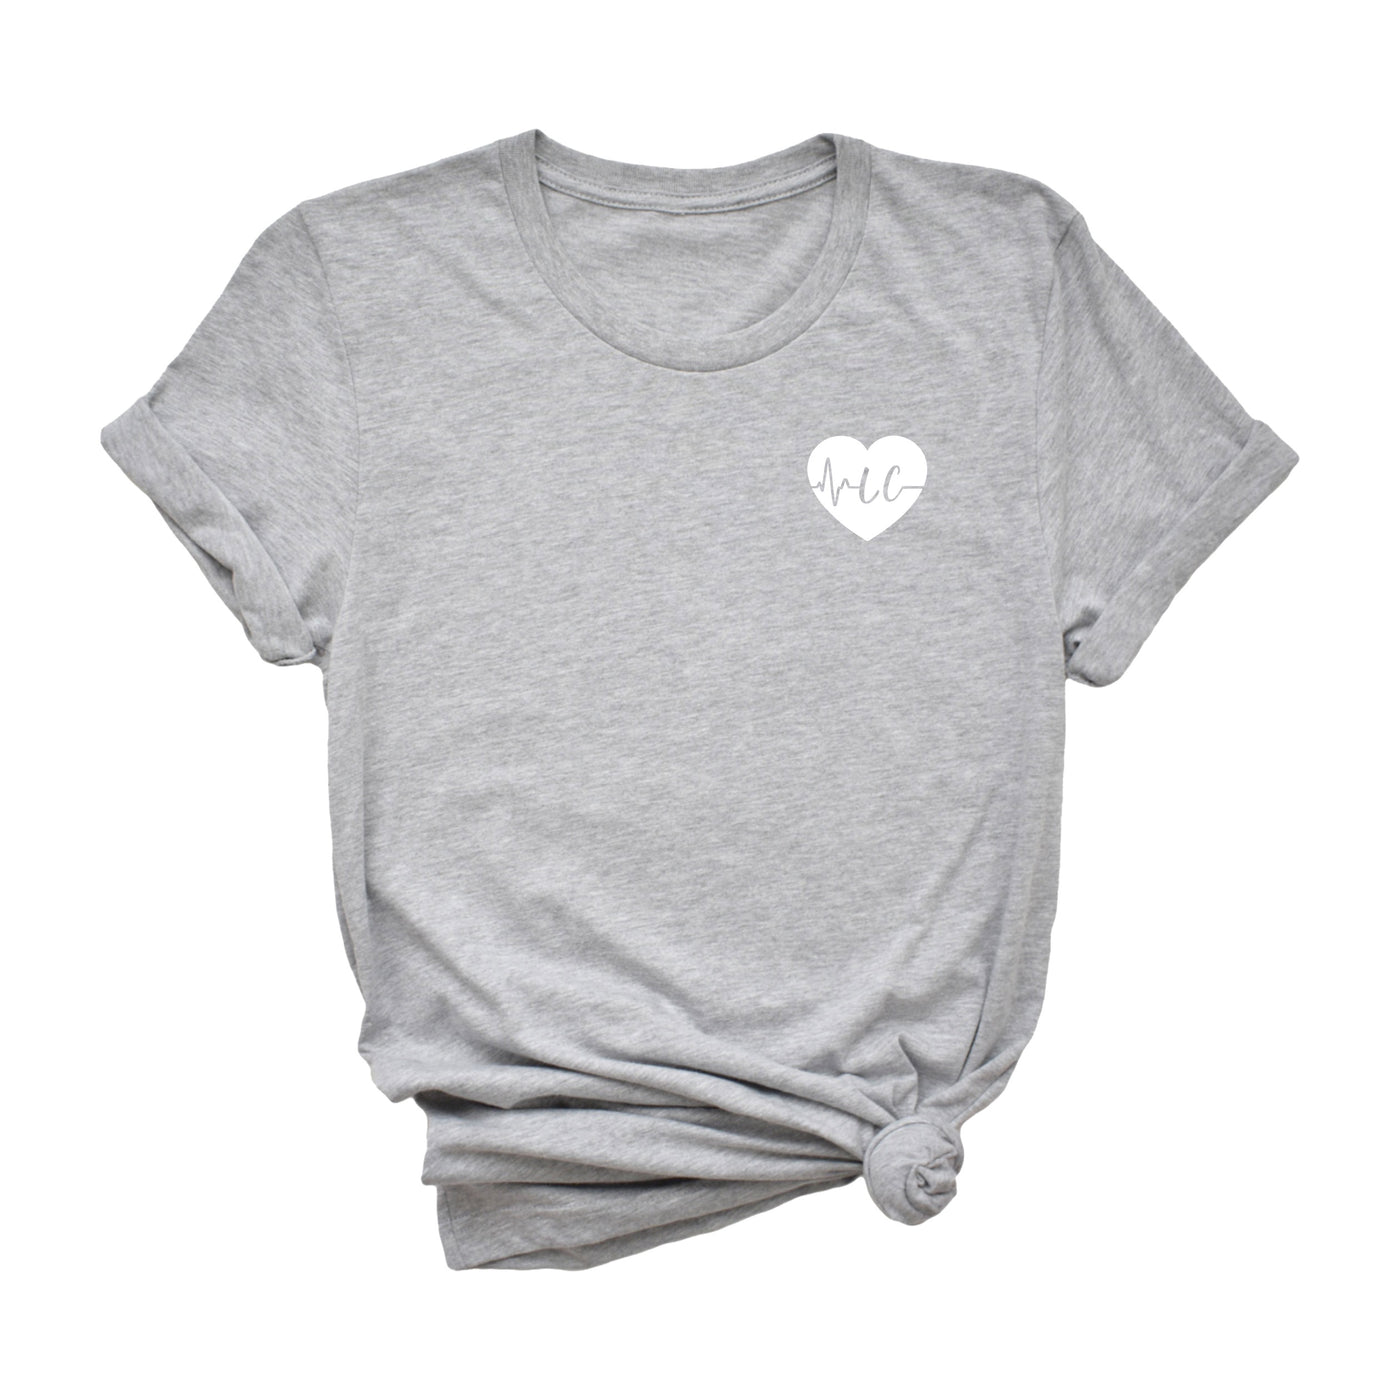 LC ECG Heart - Shirt